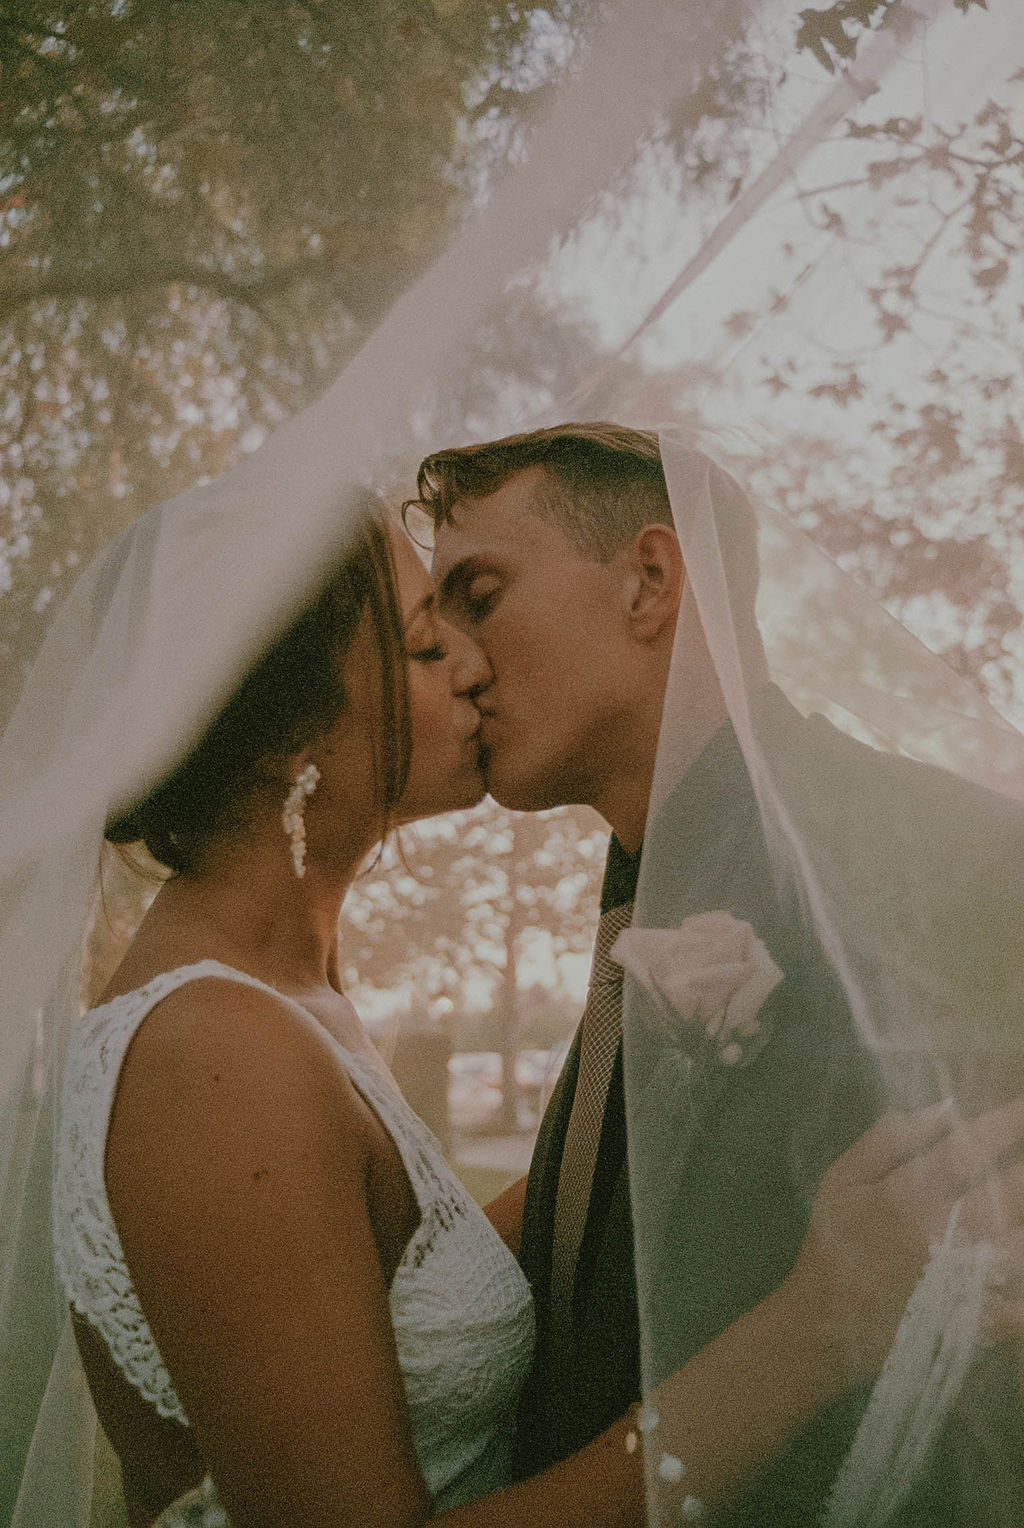 the couple kissing underneath the wedding veil